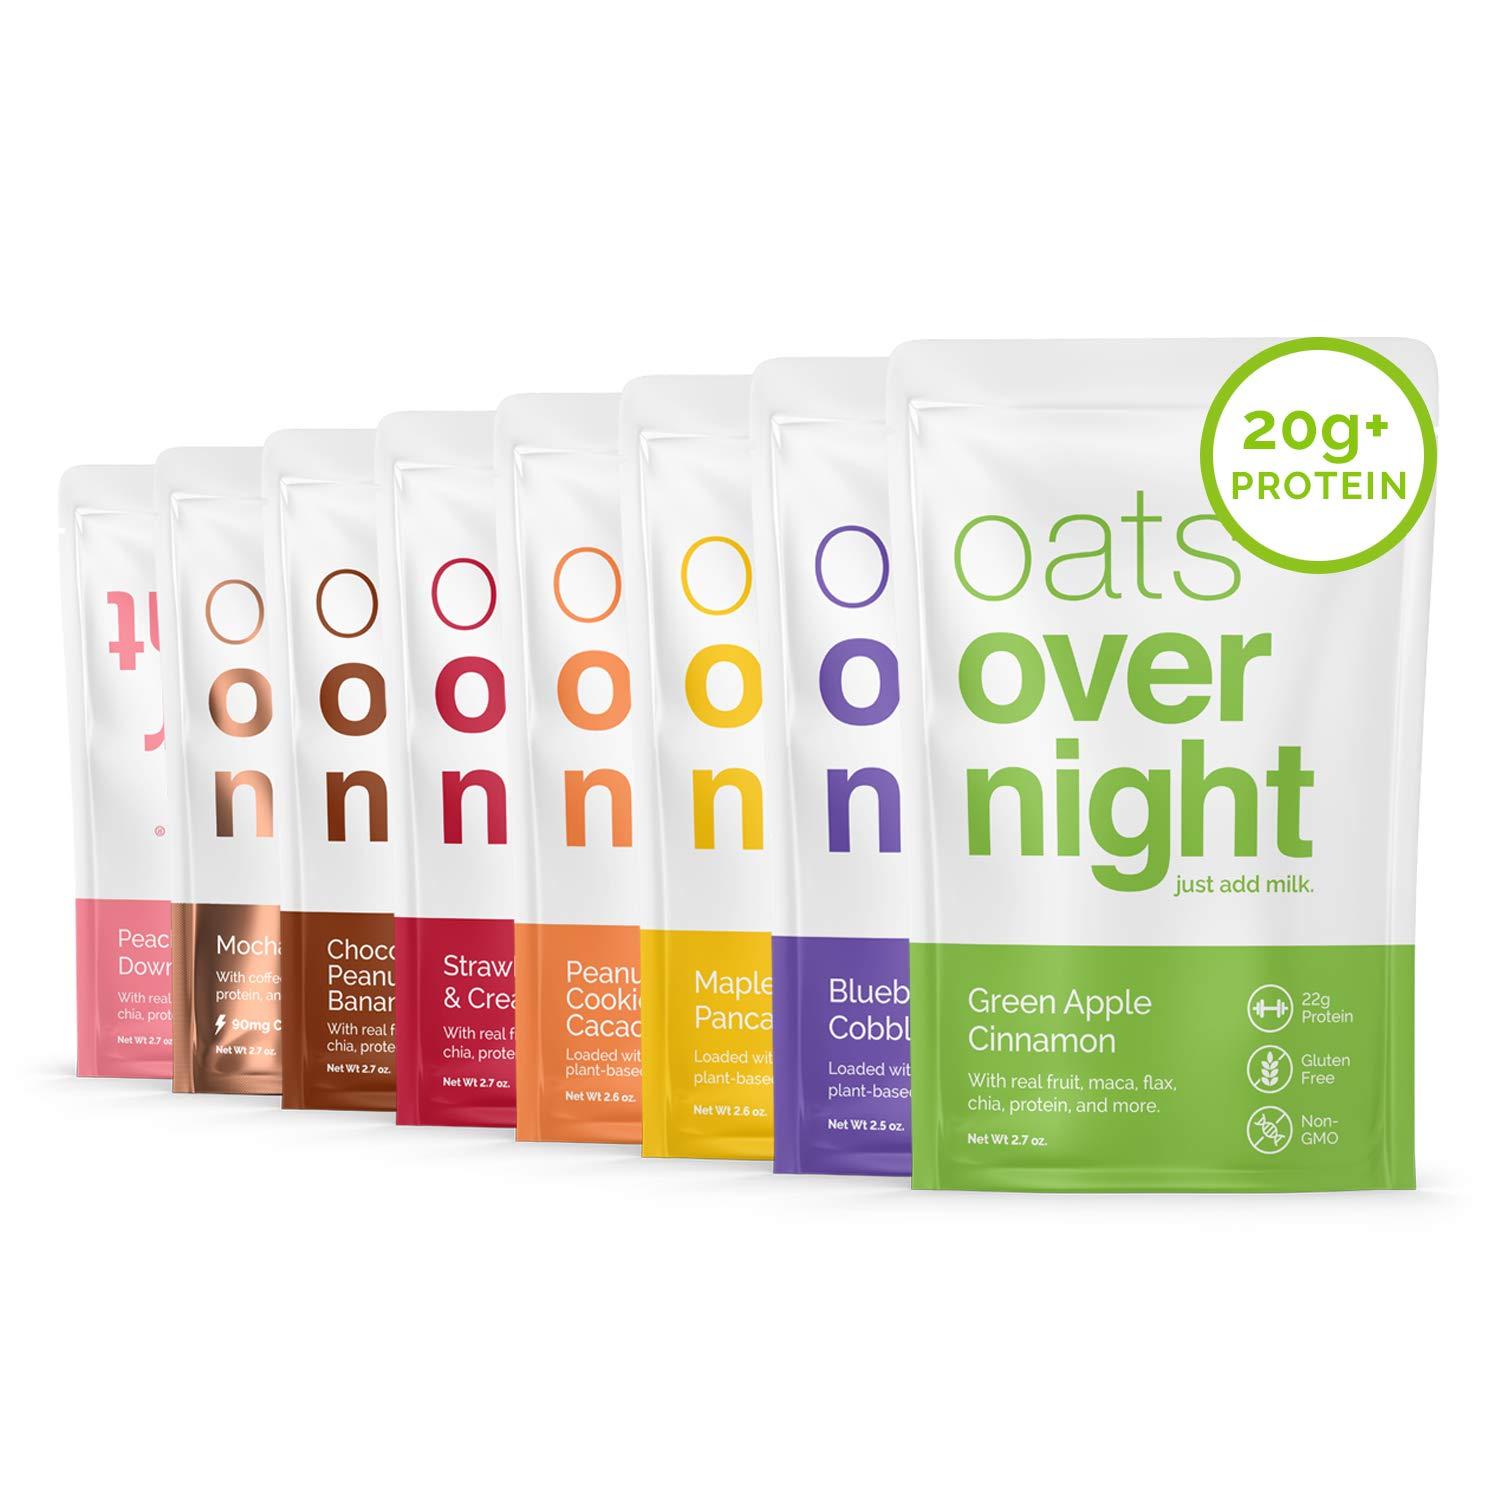 Oats Overnight - Peach Upside Down Cake - 20g Protein, High Fiber Breakfast Shake - Gluten Free, Non GMO Oatmeal 2.7 oz per Meal 8 Pack